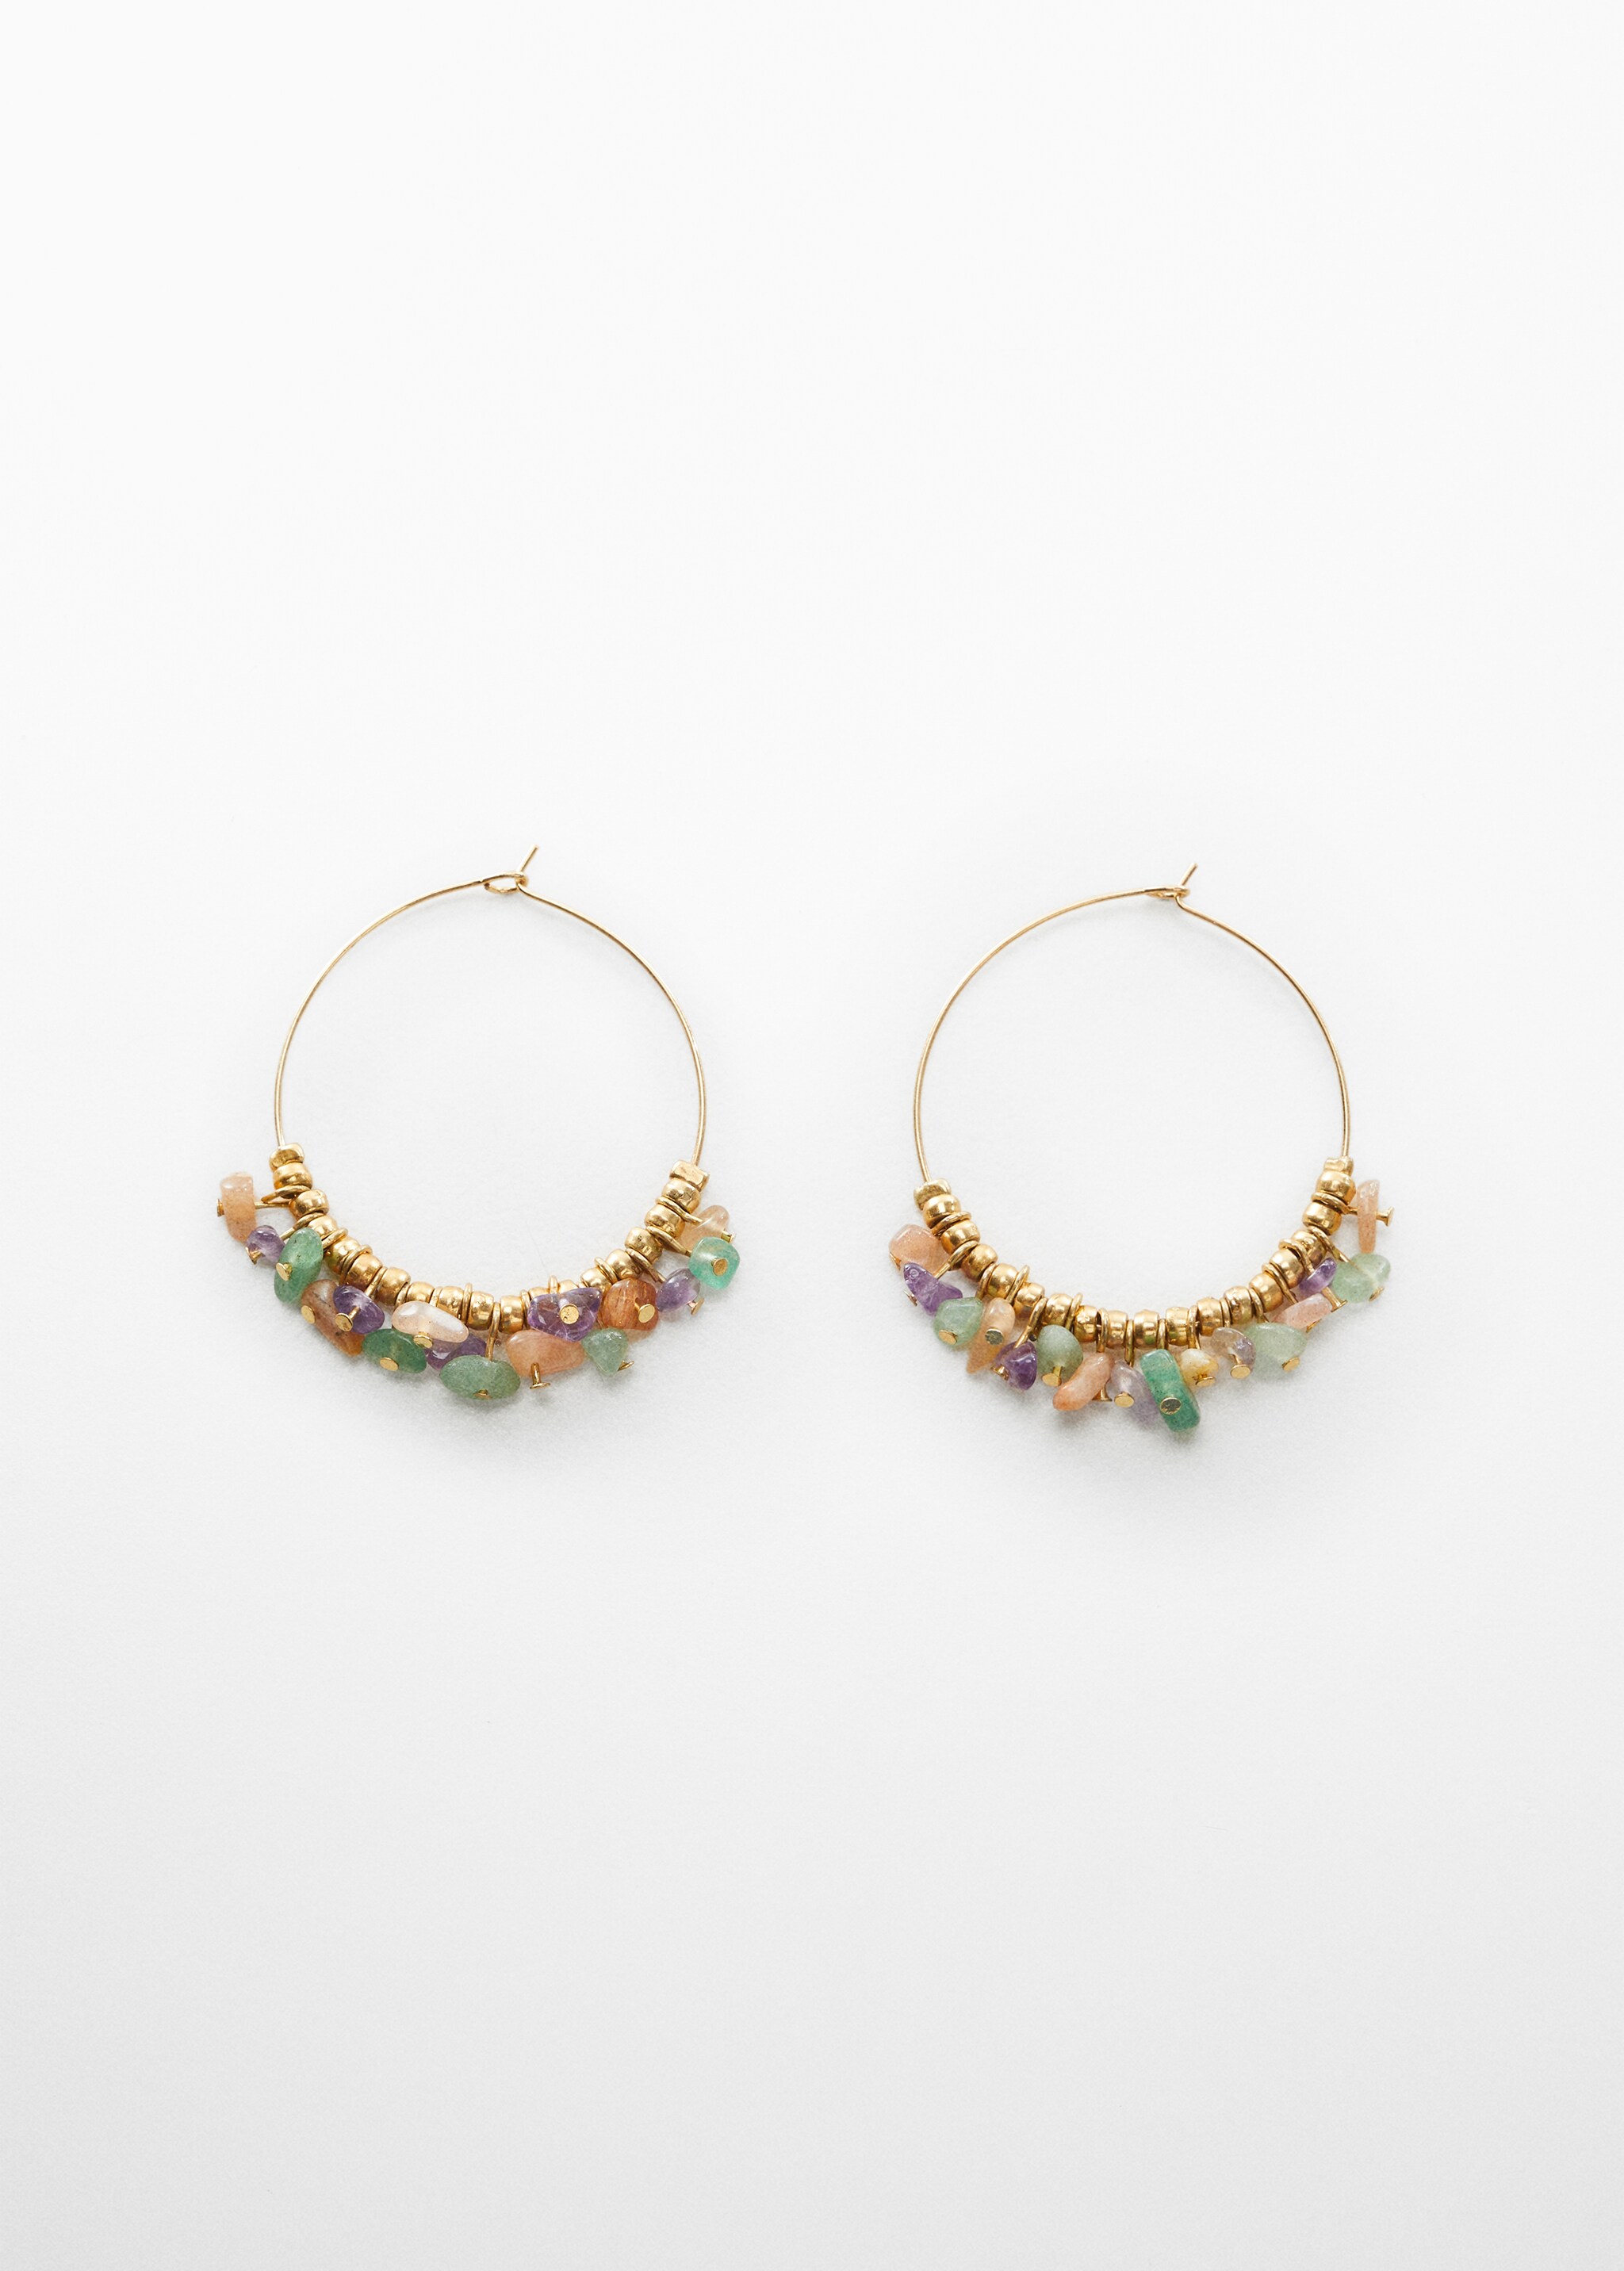 Bead loop earrings - Article without model